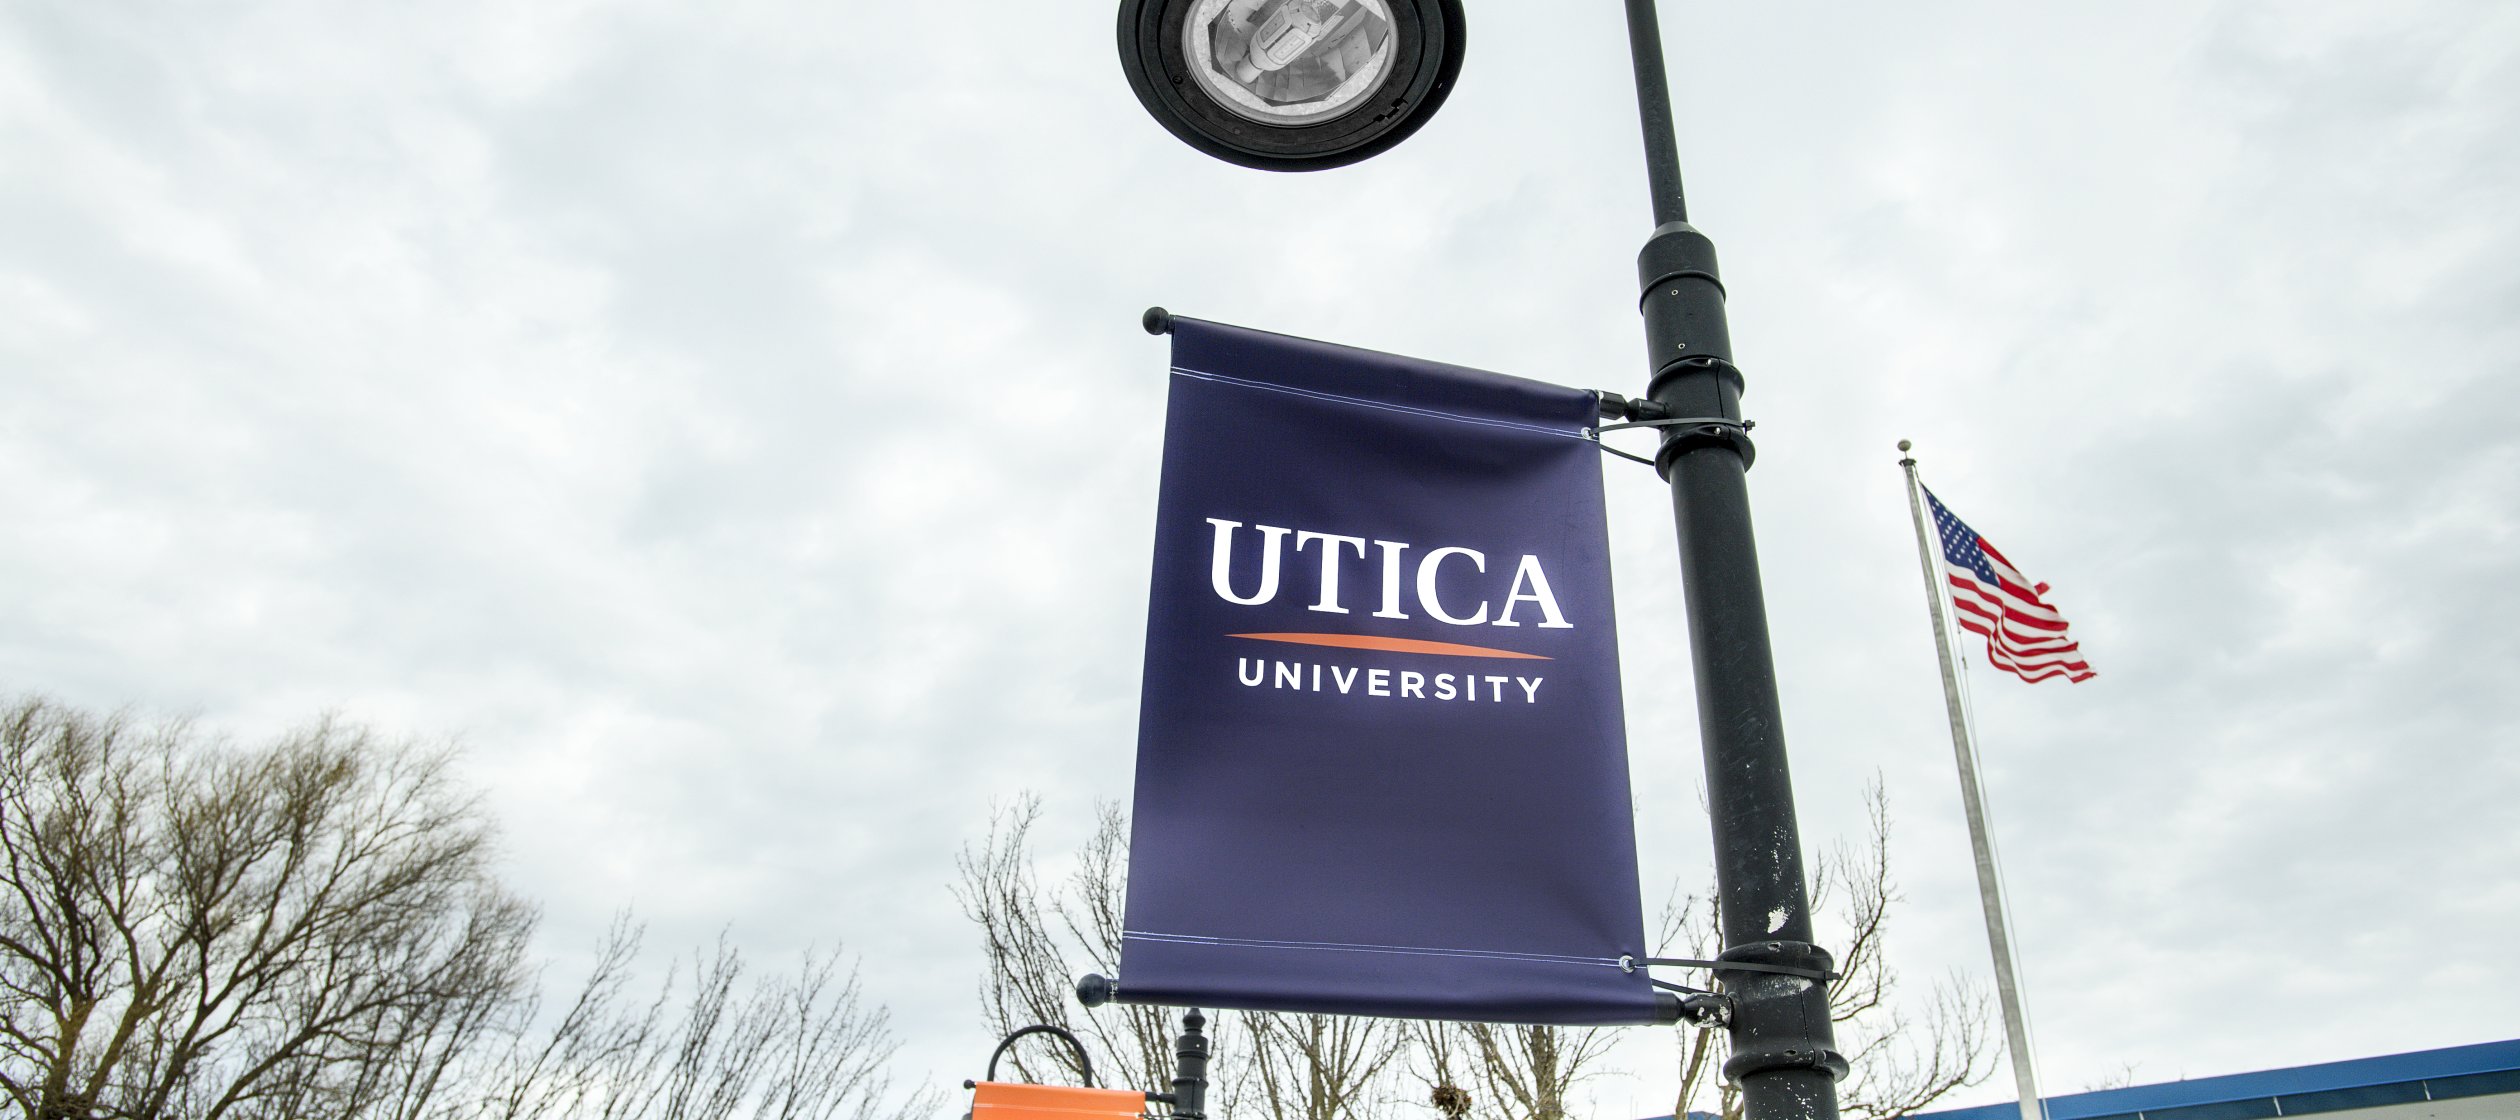 Utica banner on campus